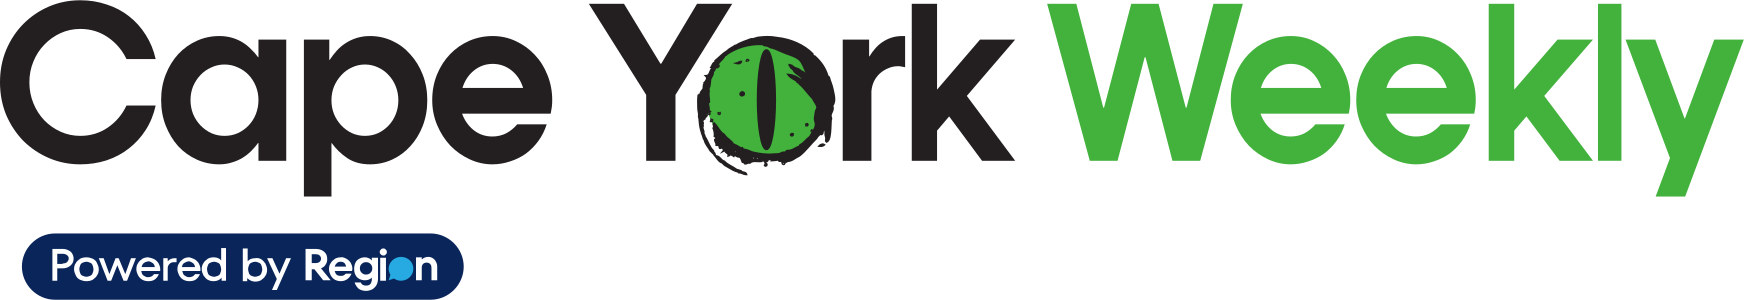 Cape York Weekly logo